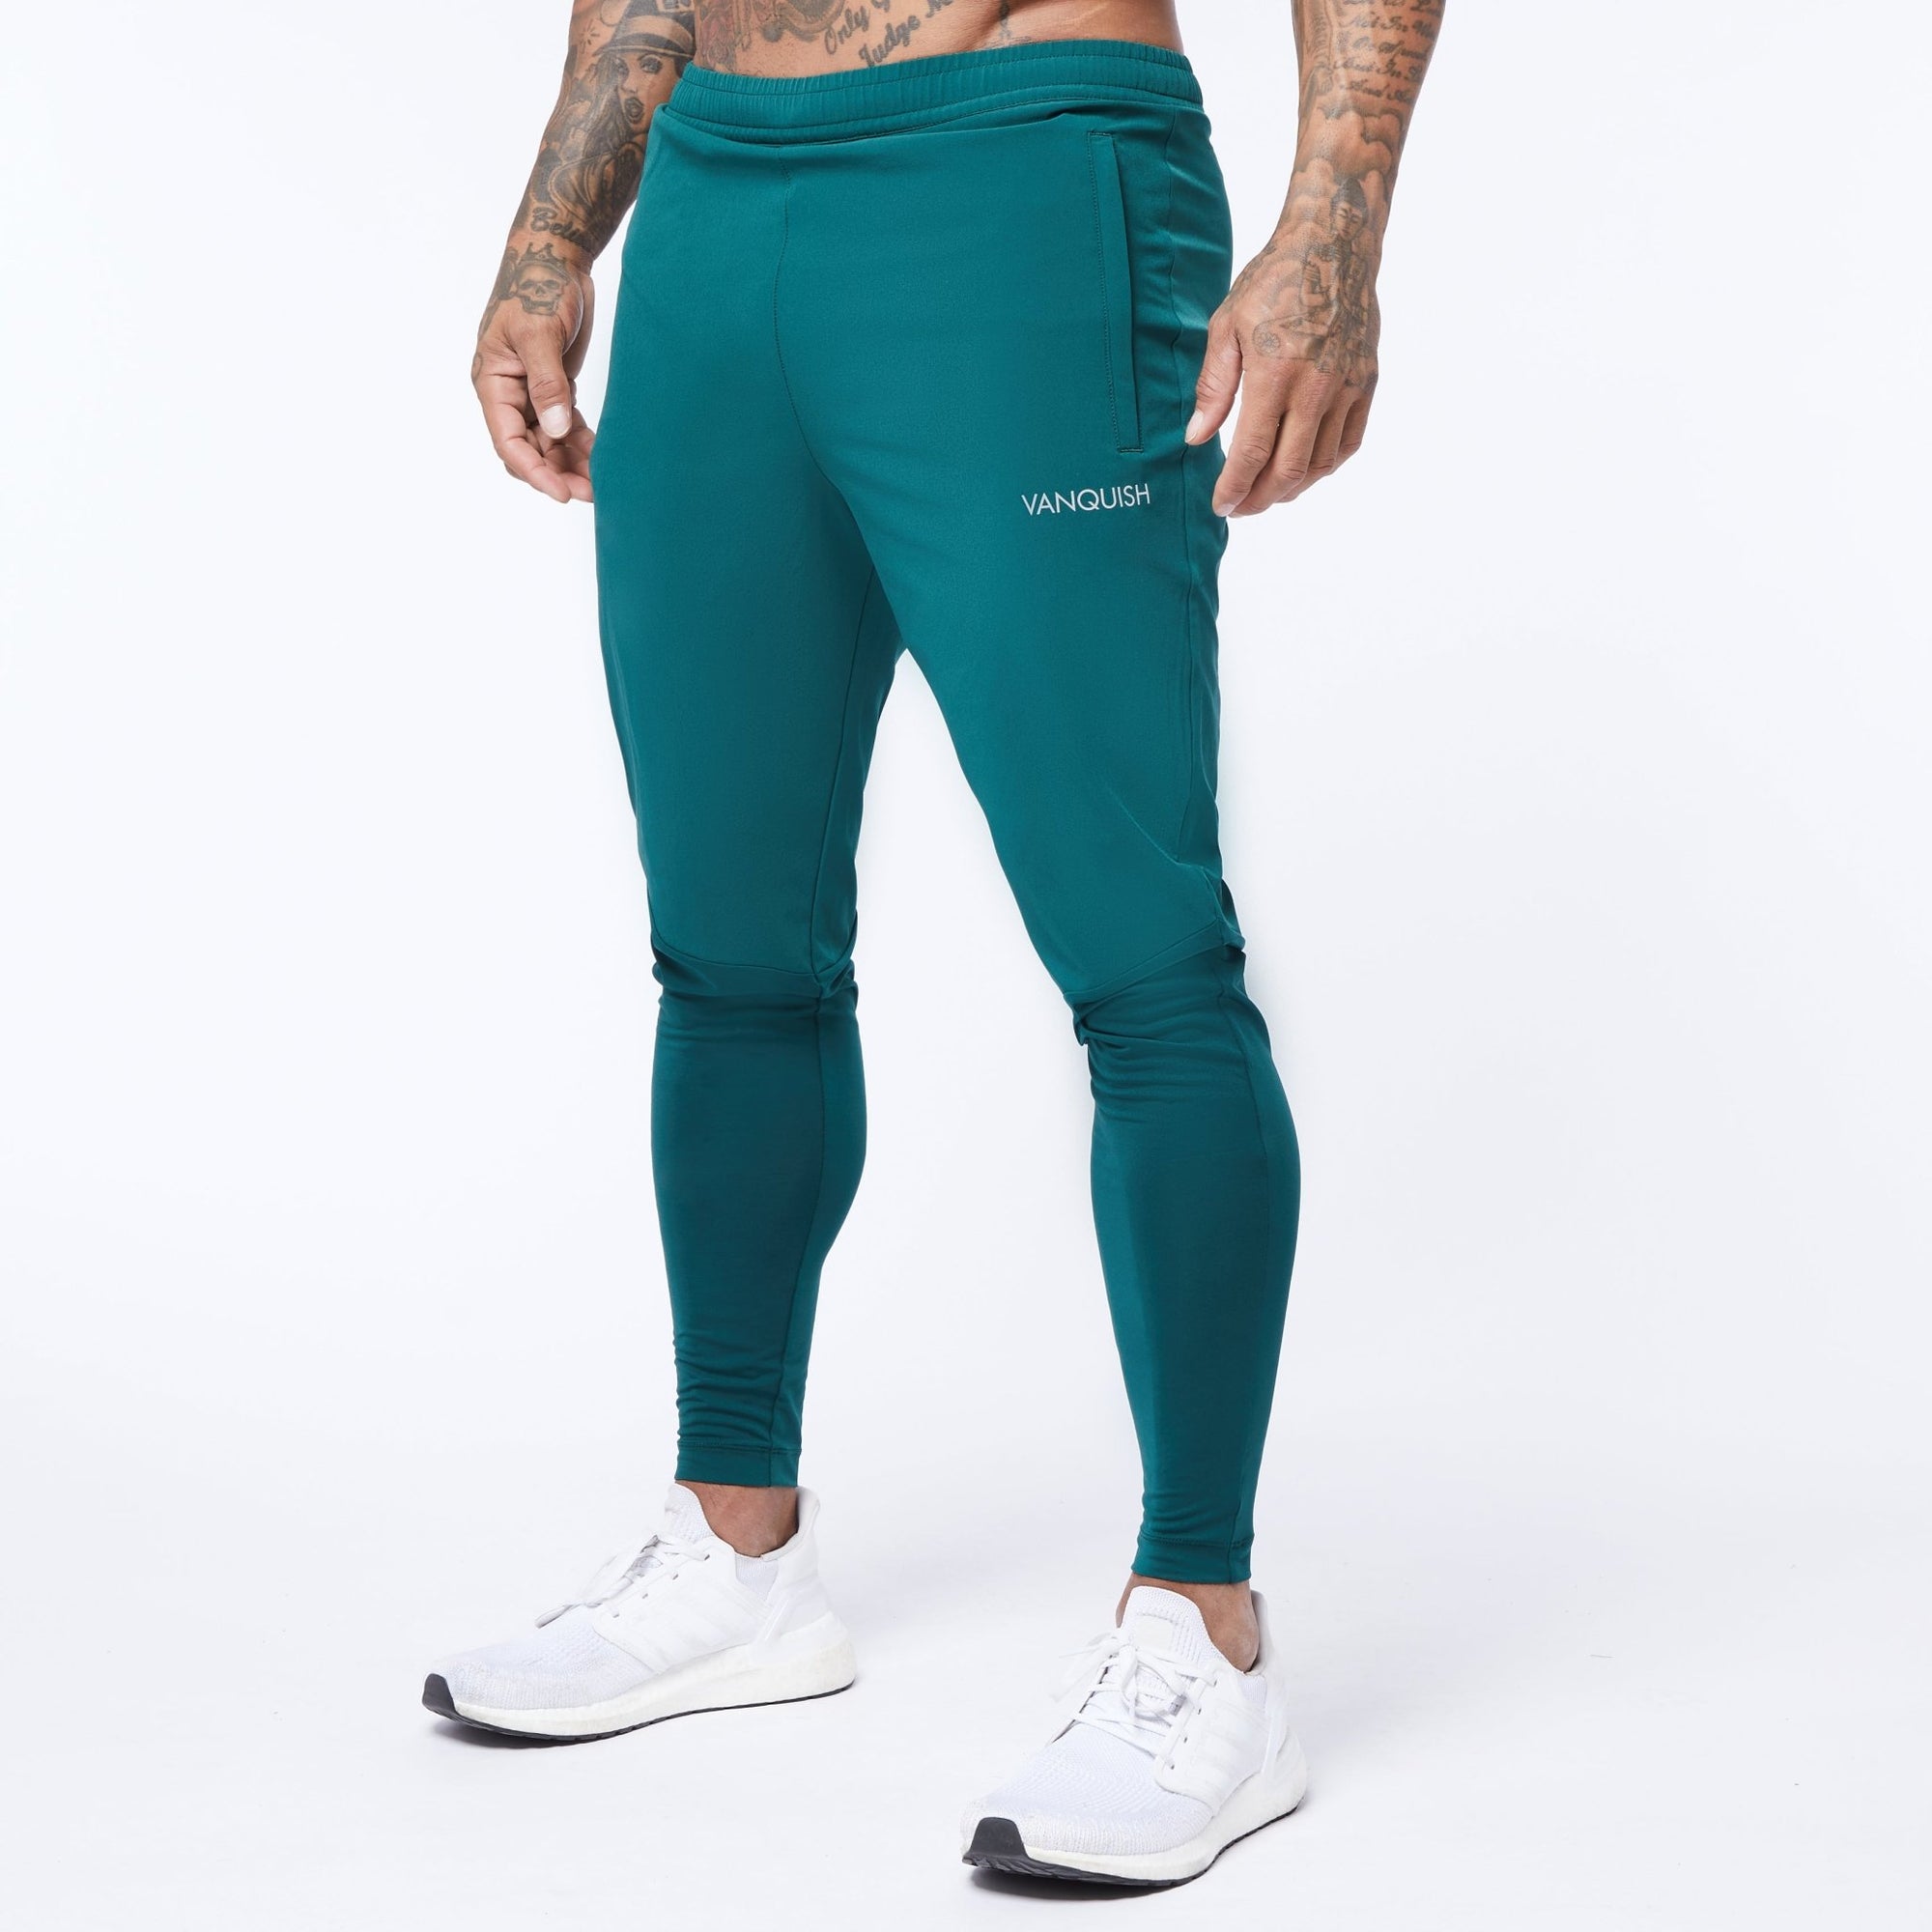 Vanquish Core Performance Forest Green Training Pants - Vanquish Fitness